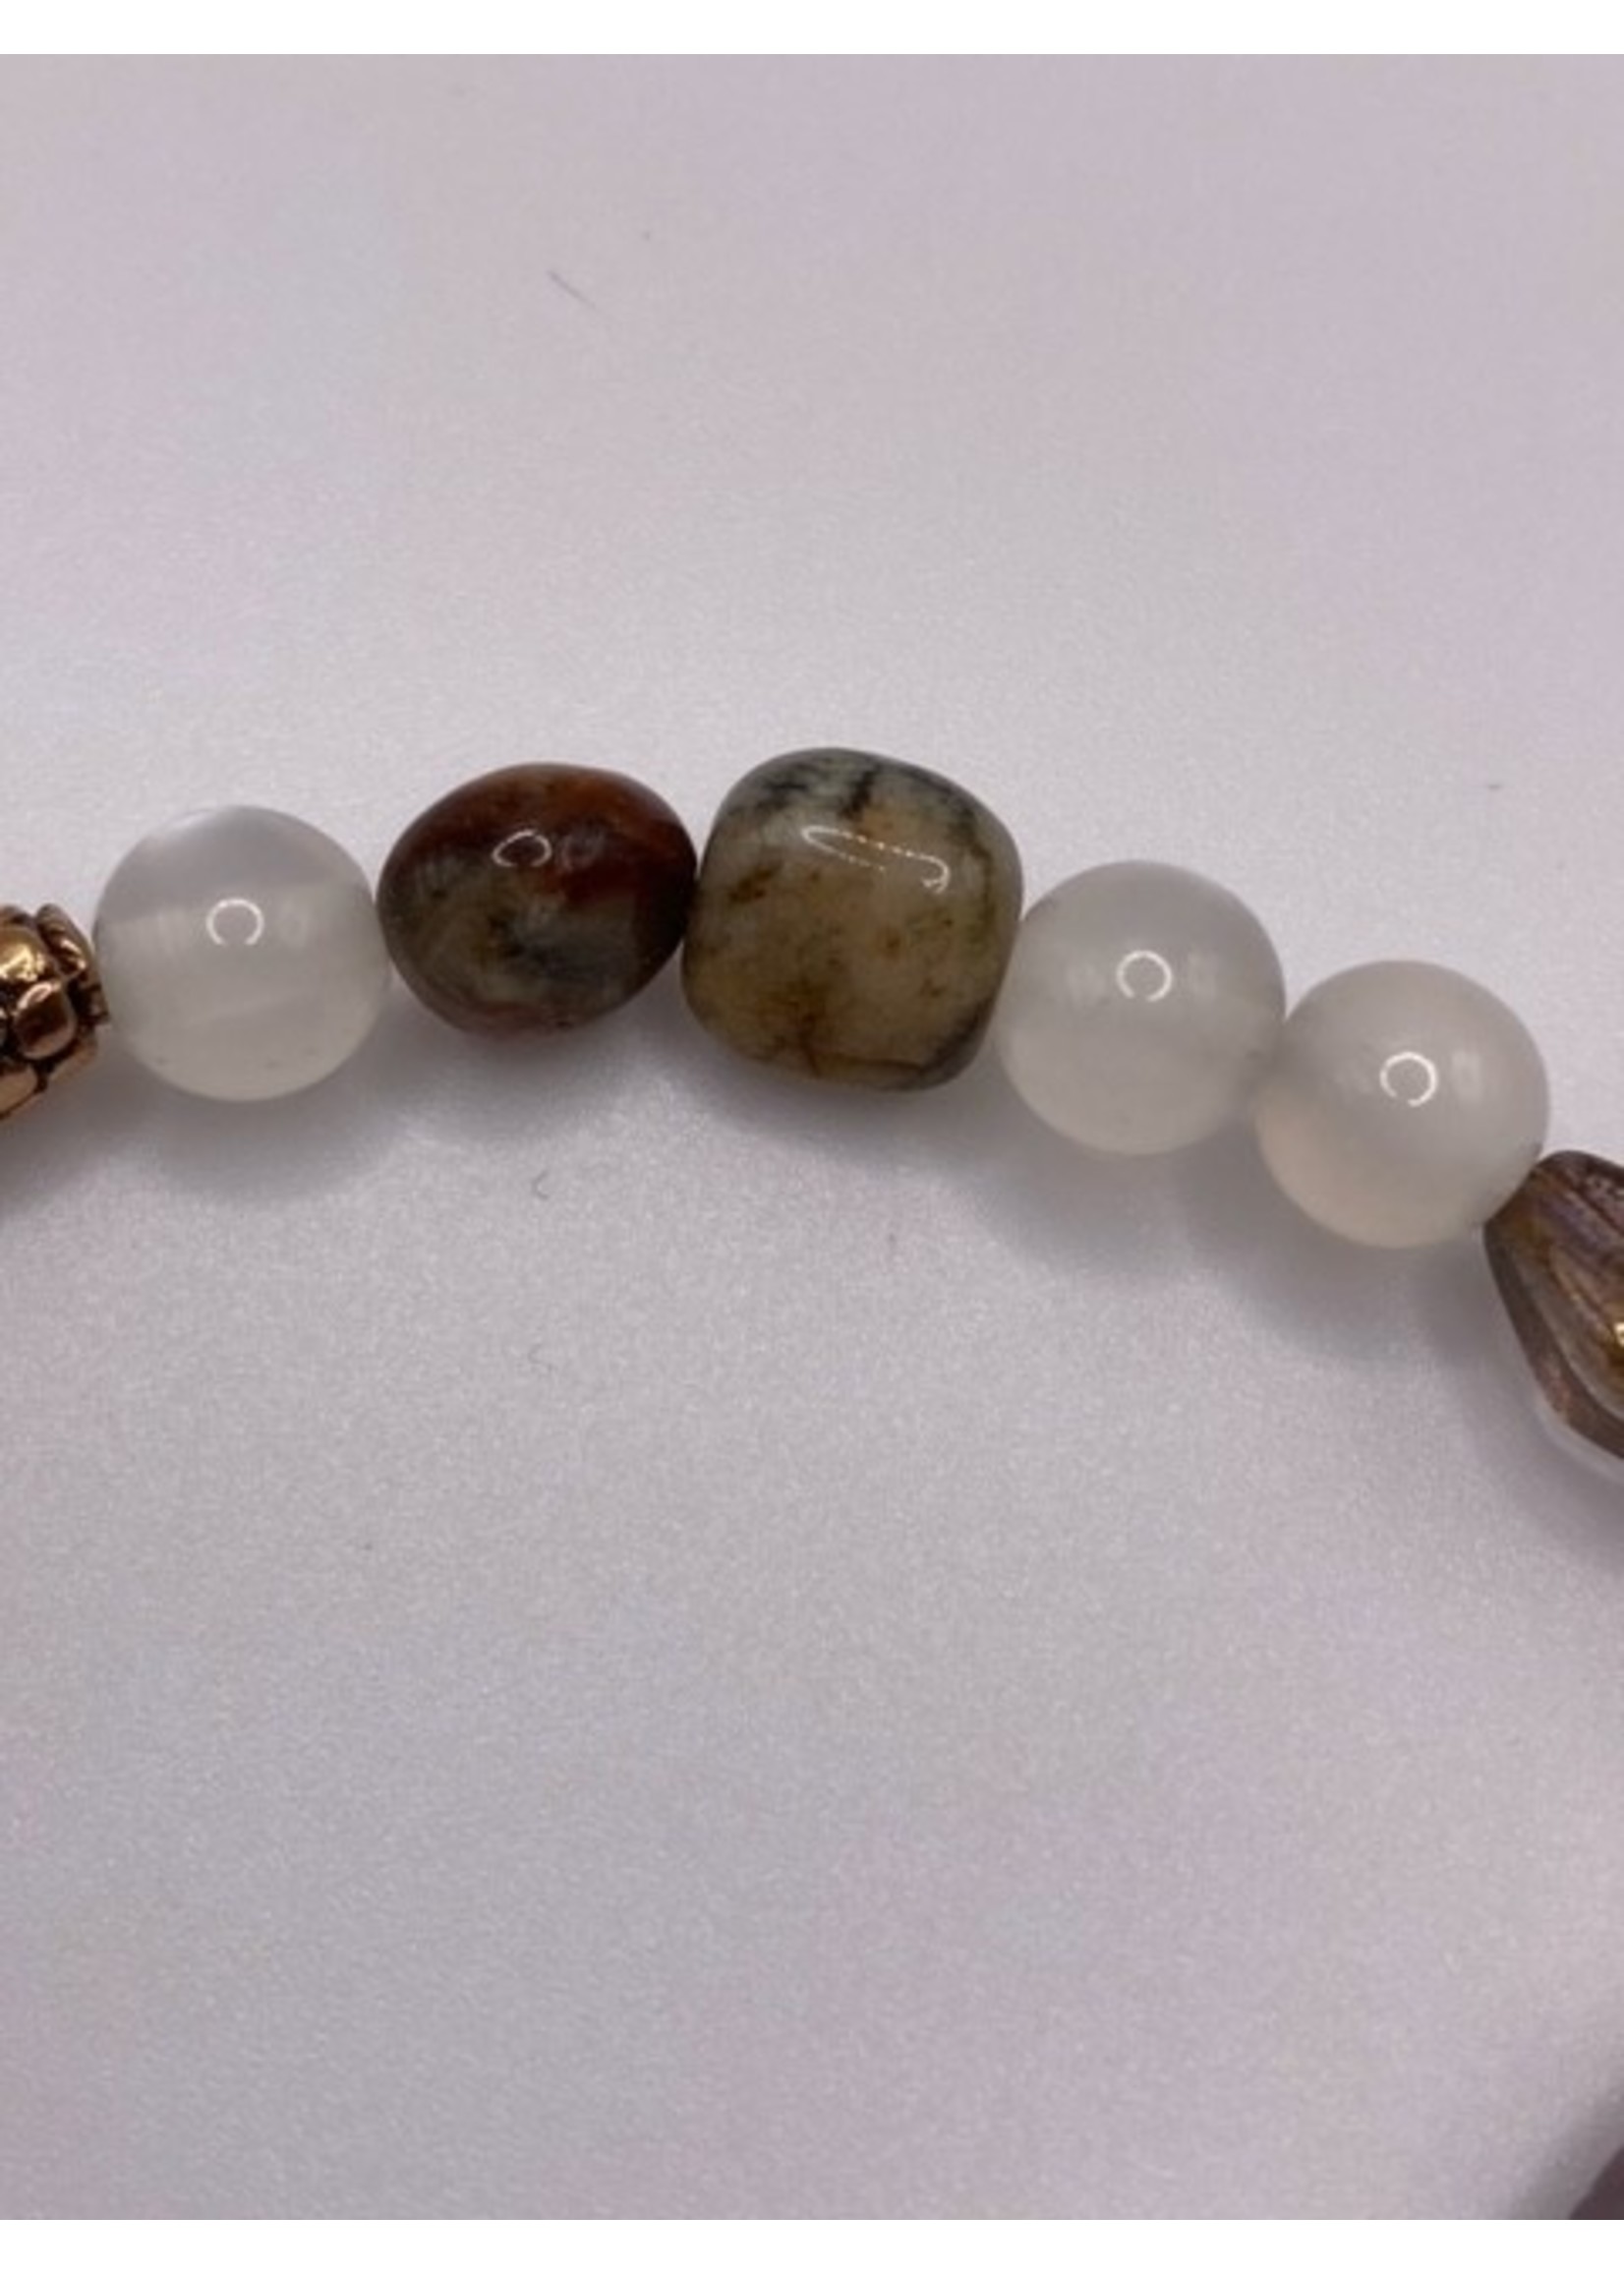 Our Twisted Dahlia Quartz, Moonstone, and Agate Stone Beads Stretch Bracelet